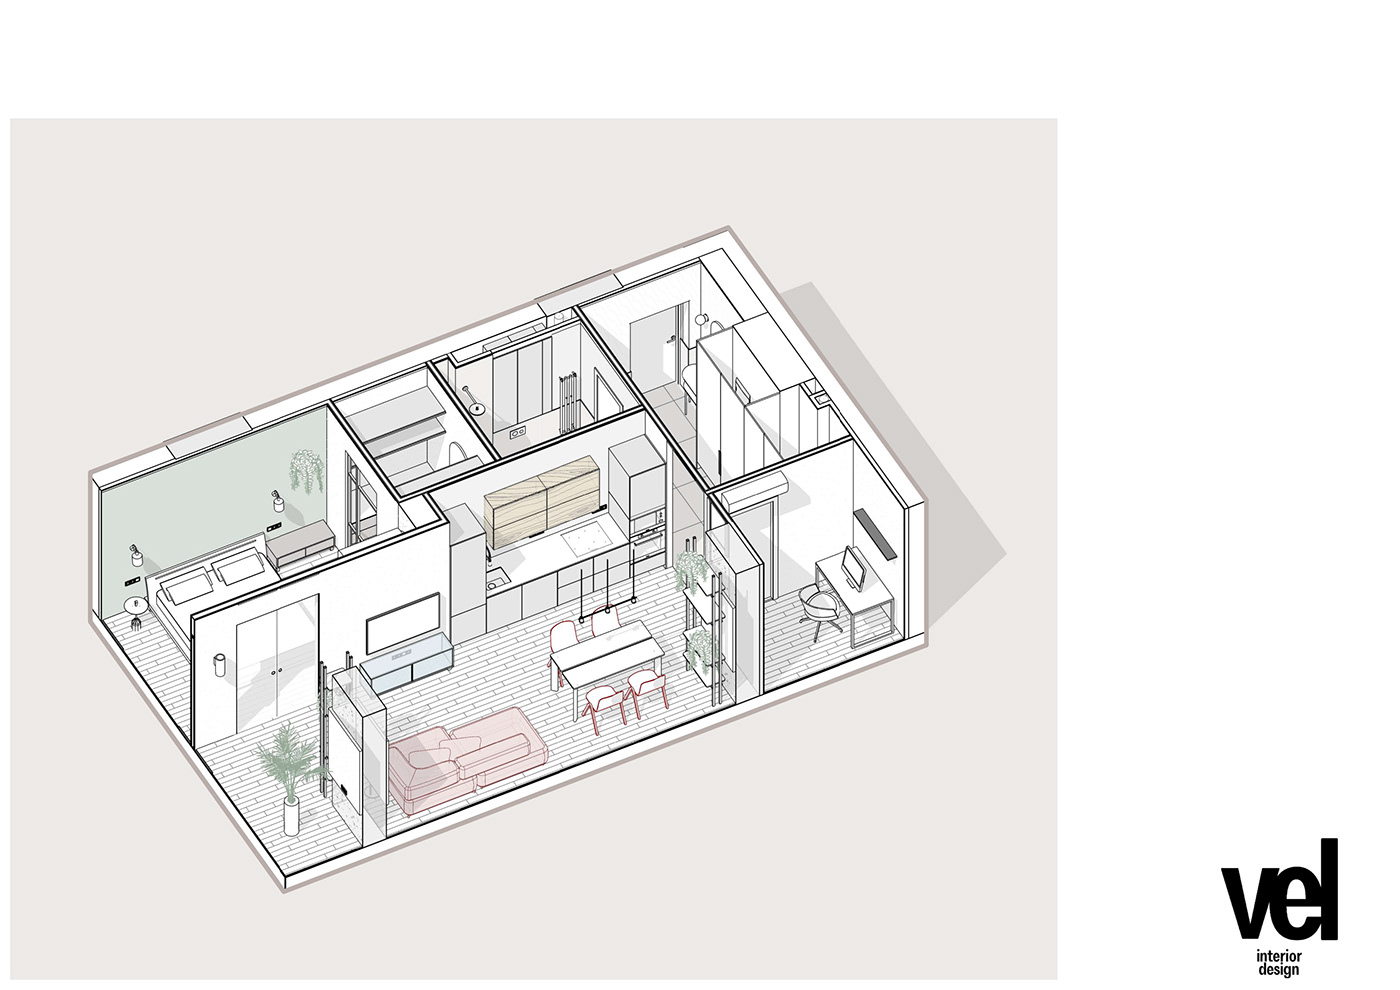 drawings revit interior design  Interior apartment design planning Layout Design Layout plans architecture